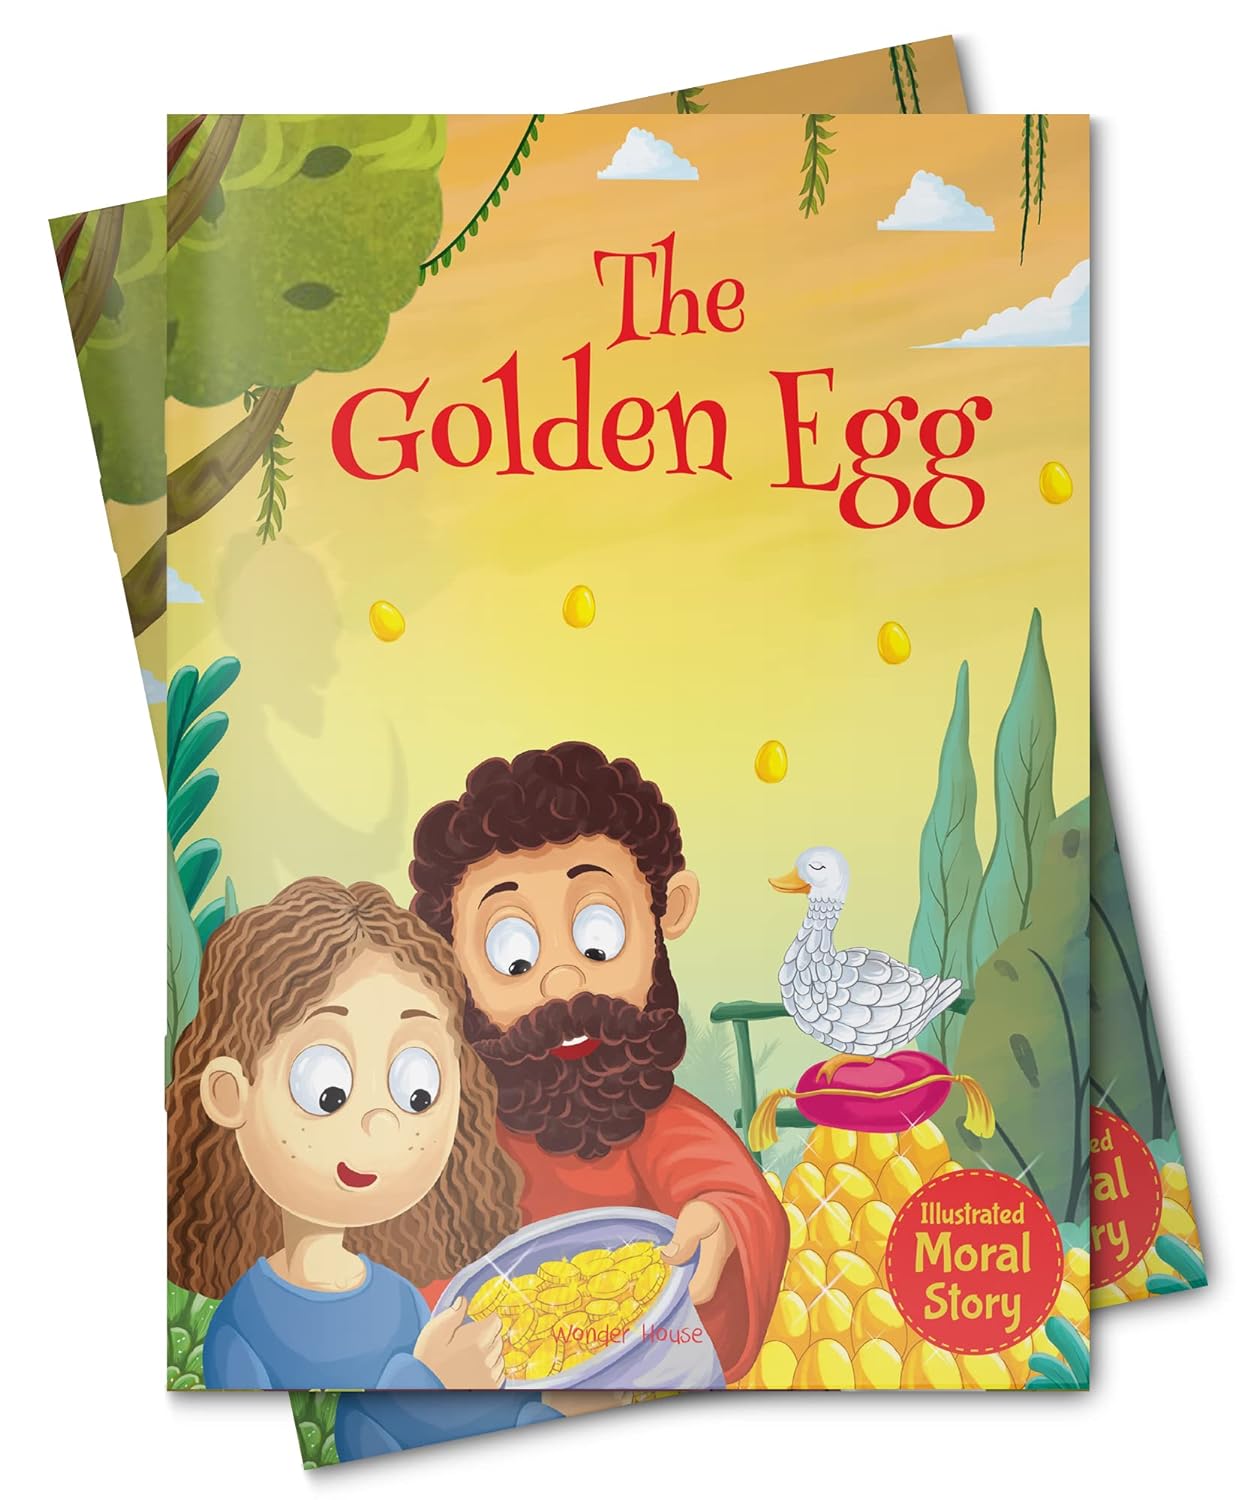 The Golden Egg - Illustrated Moral Story for Children